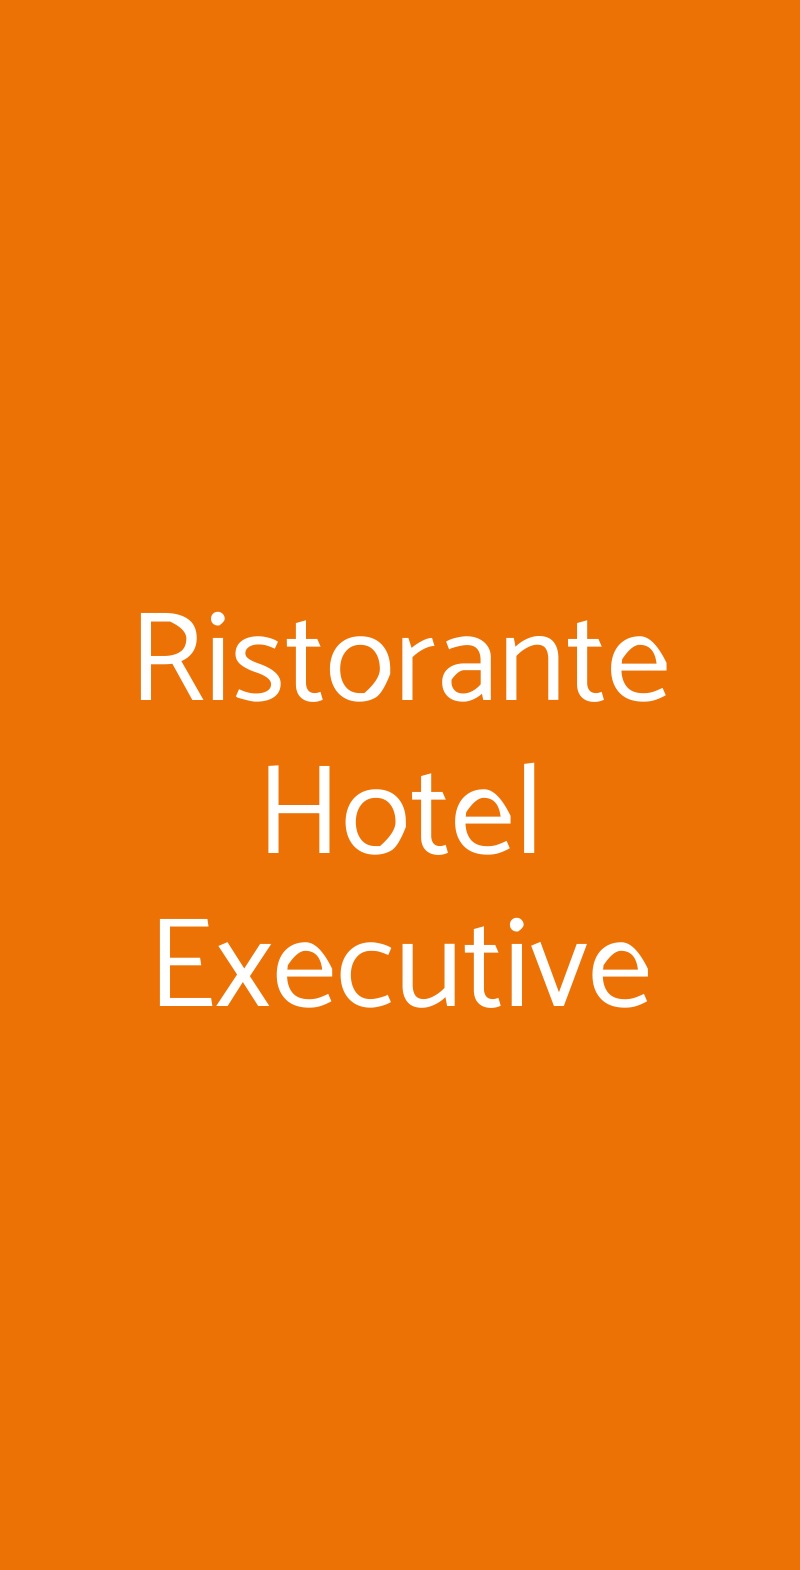 Ristorante Hotel Executive Siena menù 1 pagina